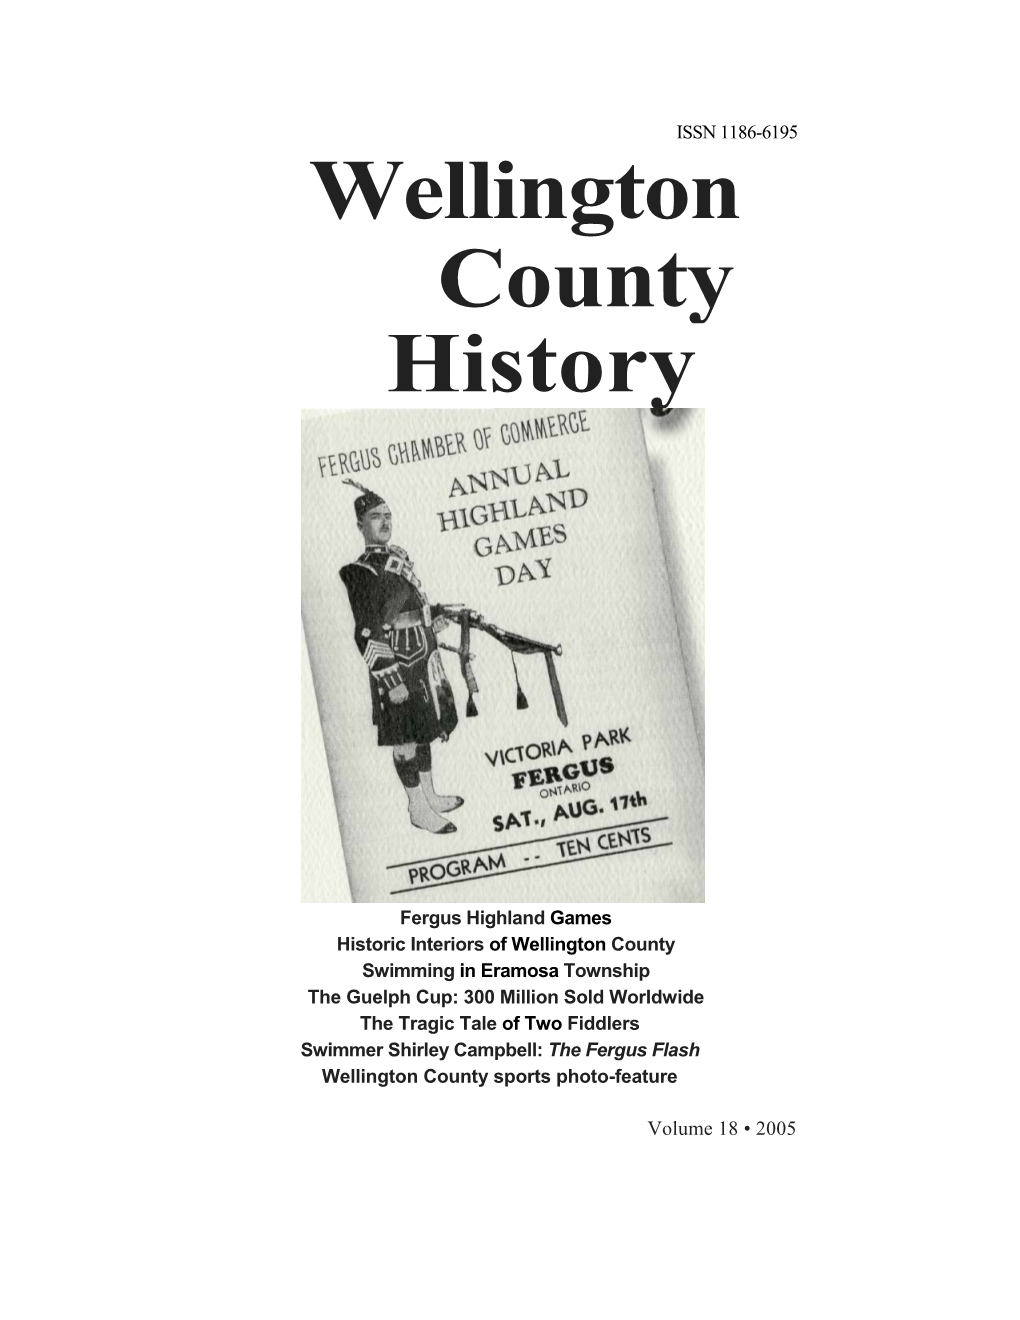 Wellington County History 2005